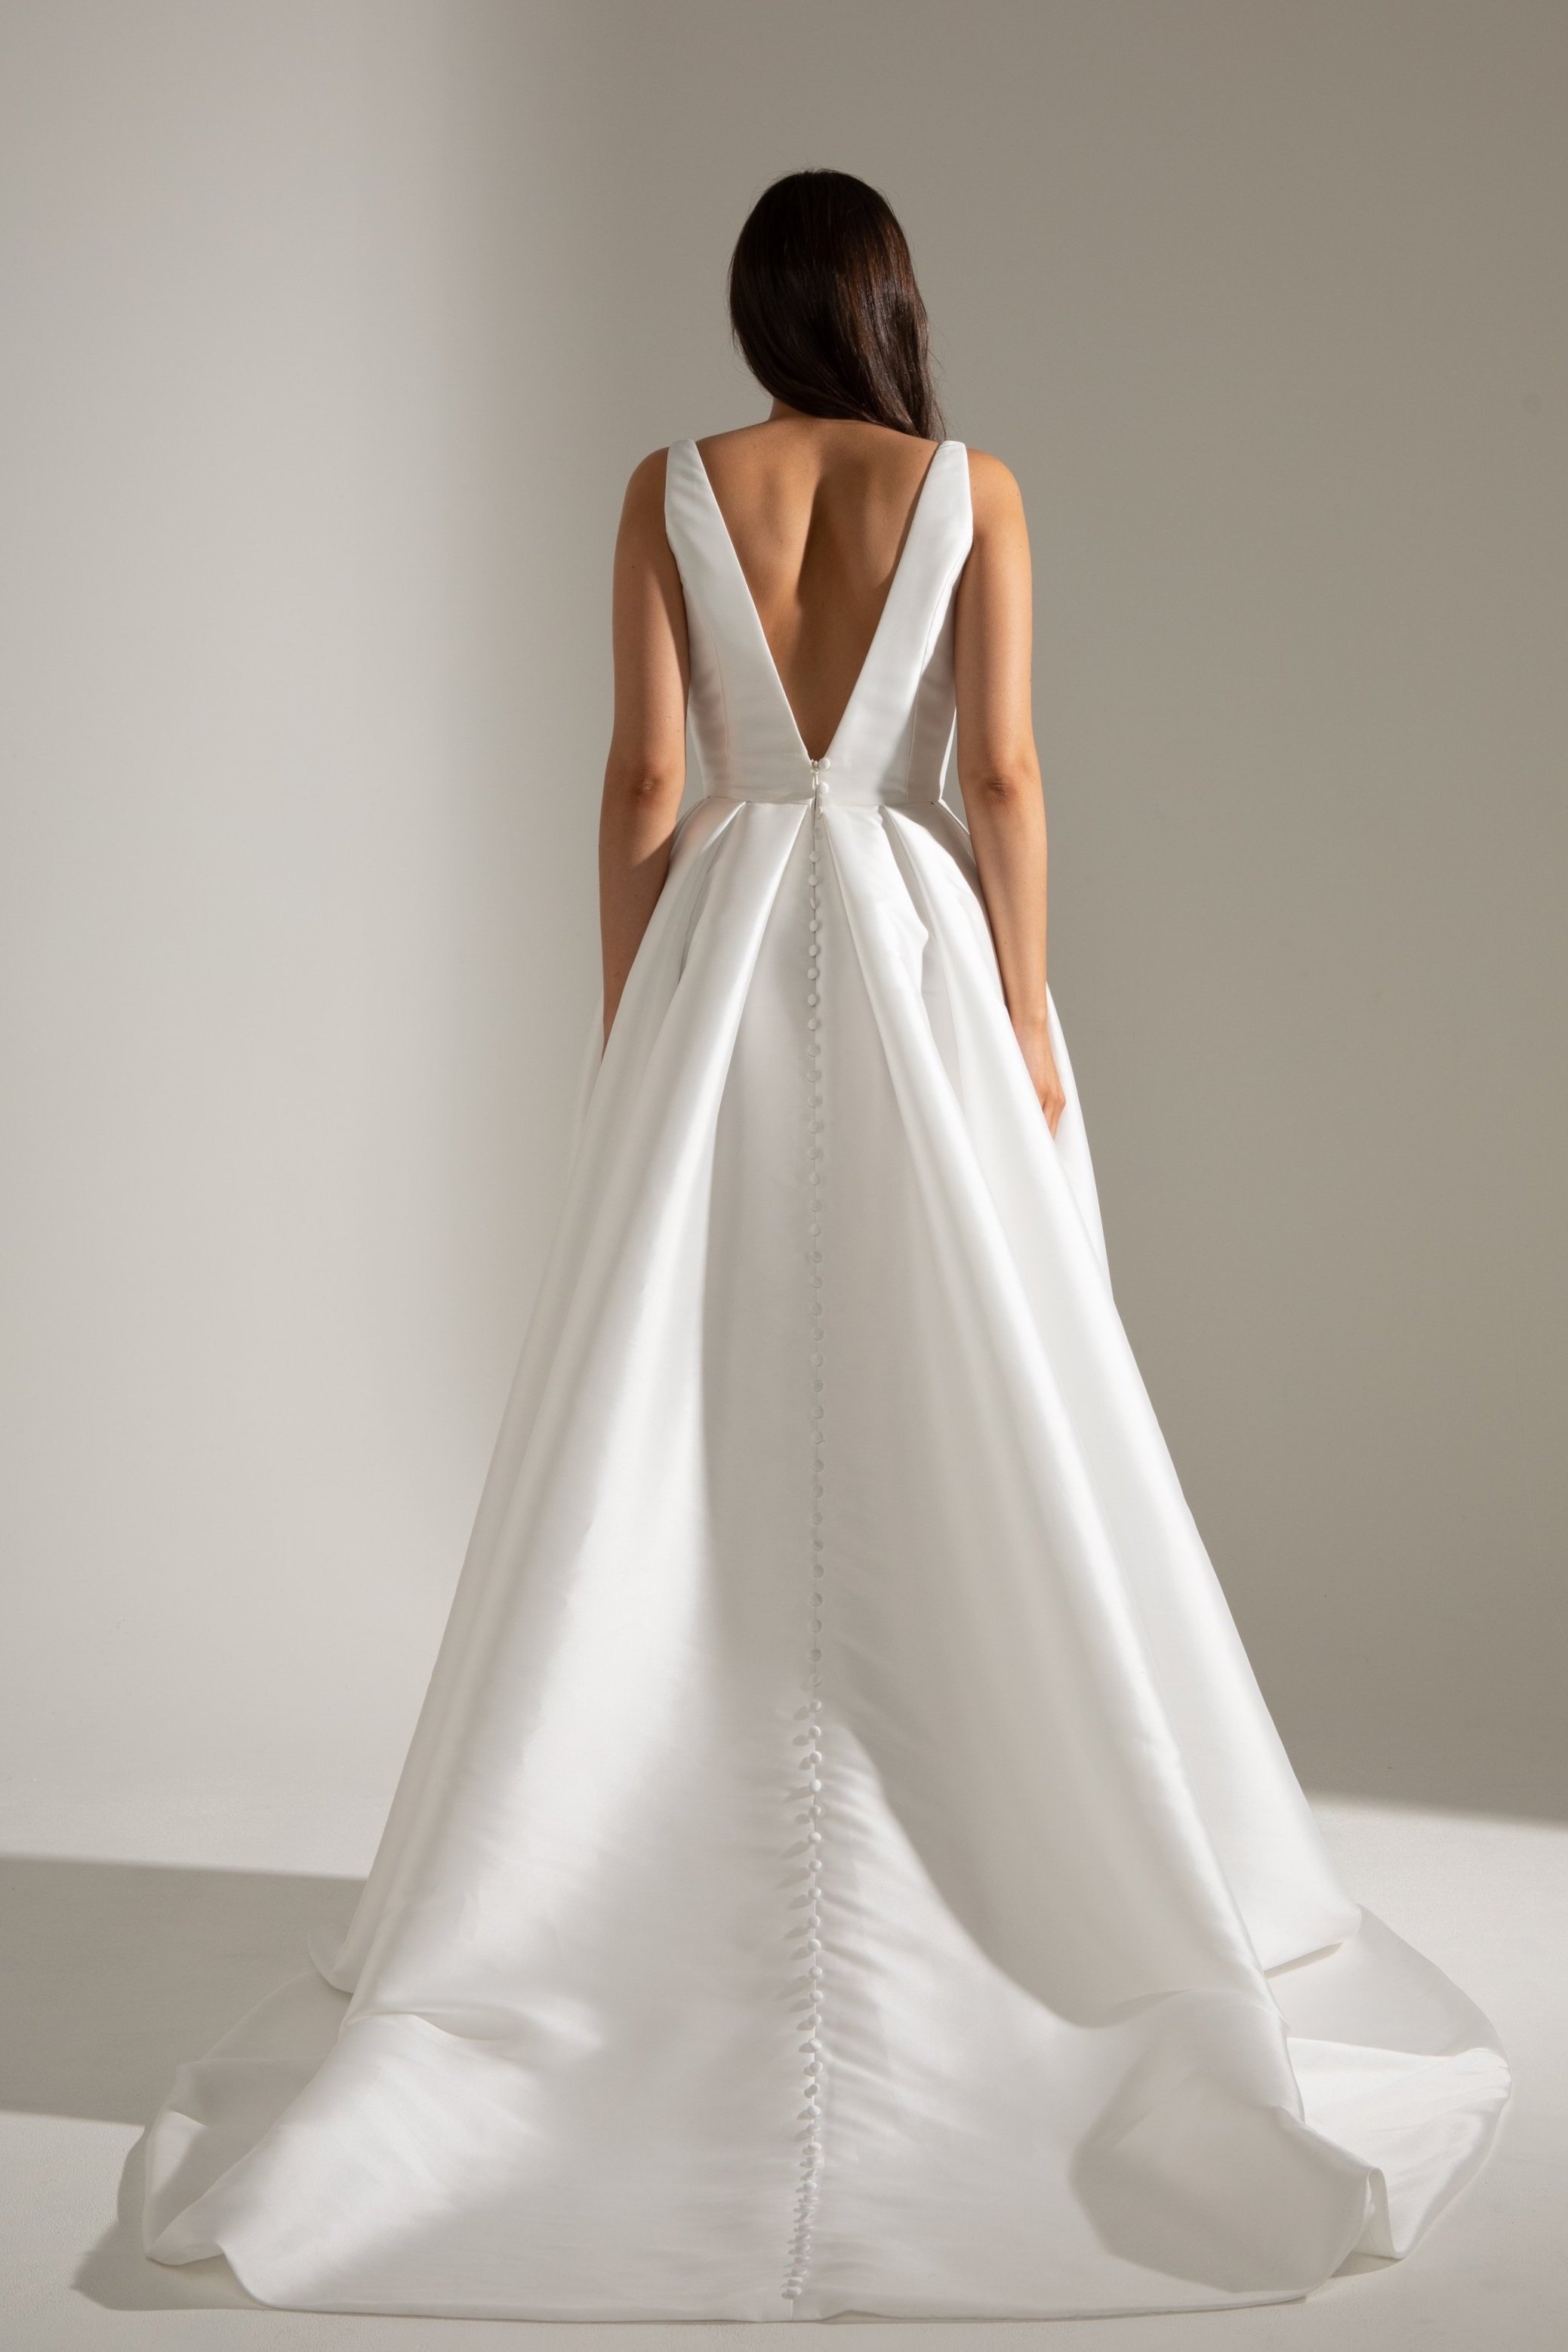 Custom Designer Bridal Gowns & Wedding Dresses in Australia — The ...